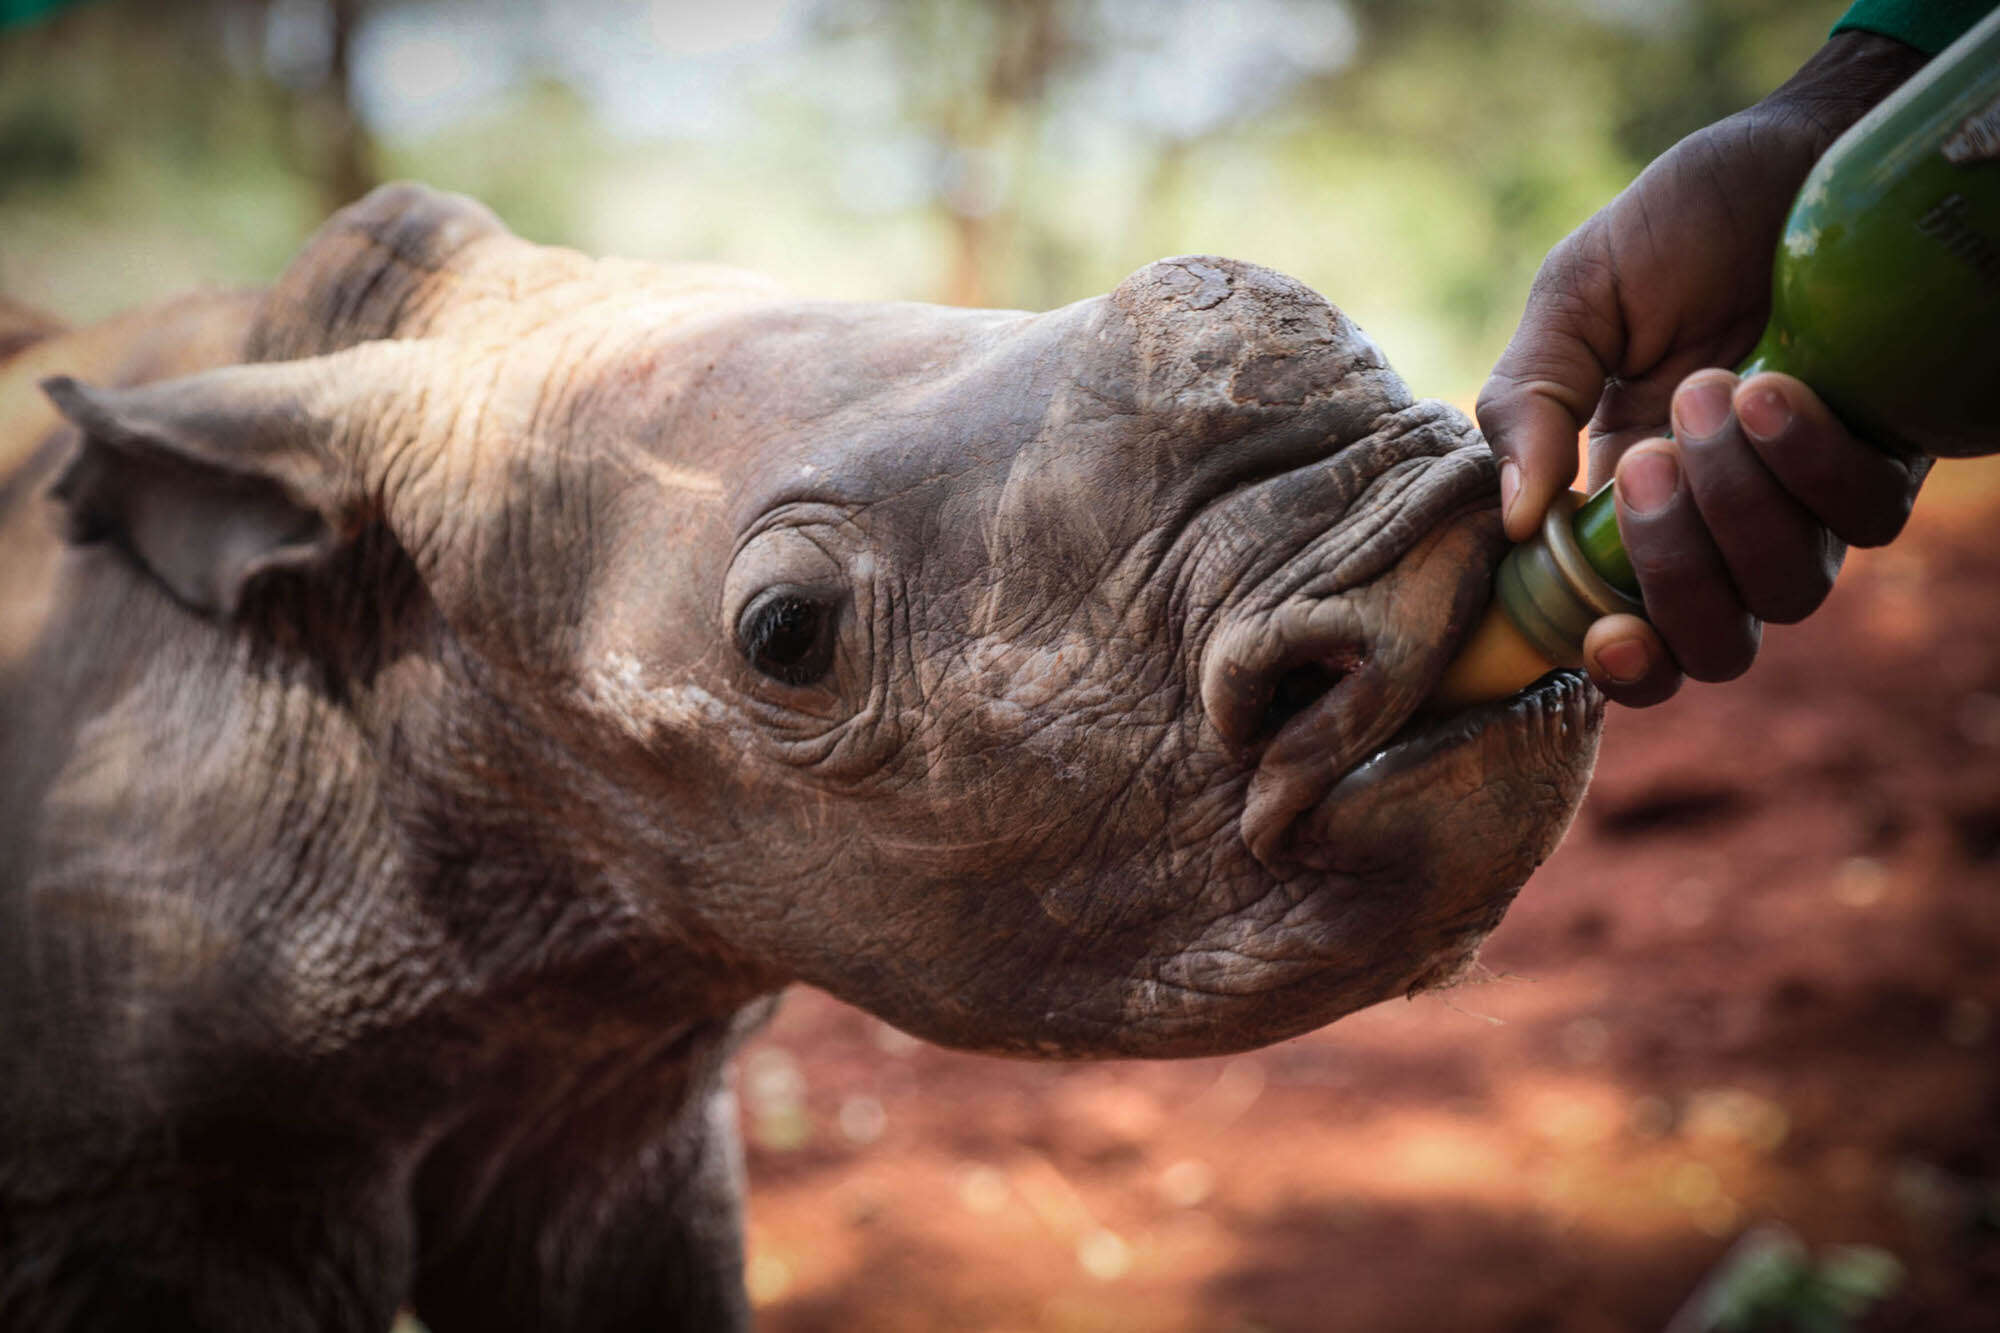 Baby rhino drinking milk from bottle